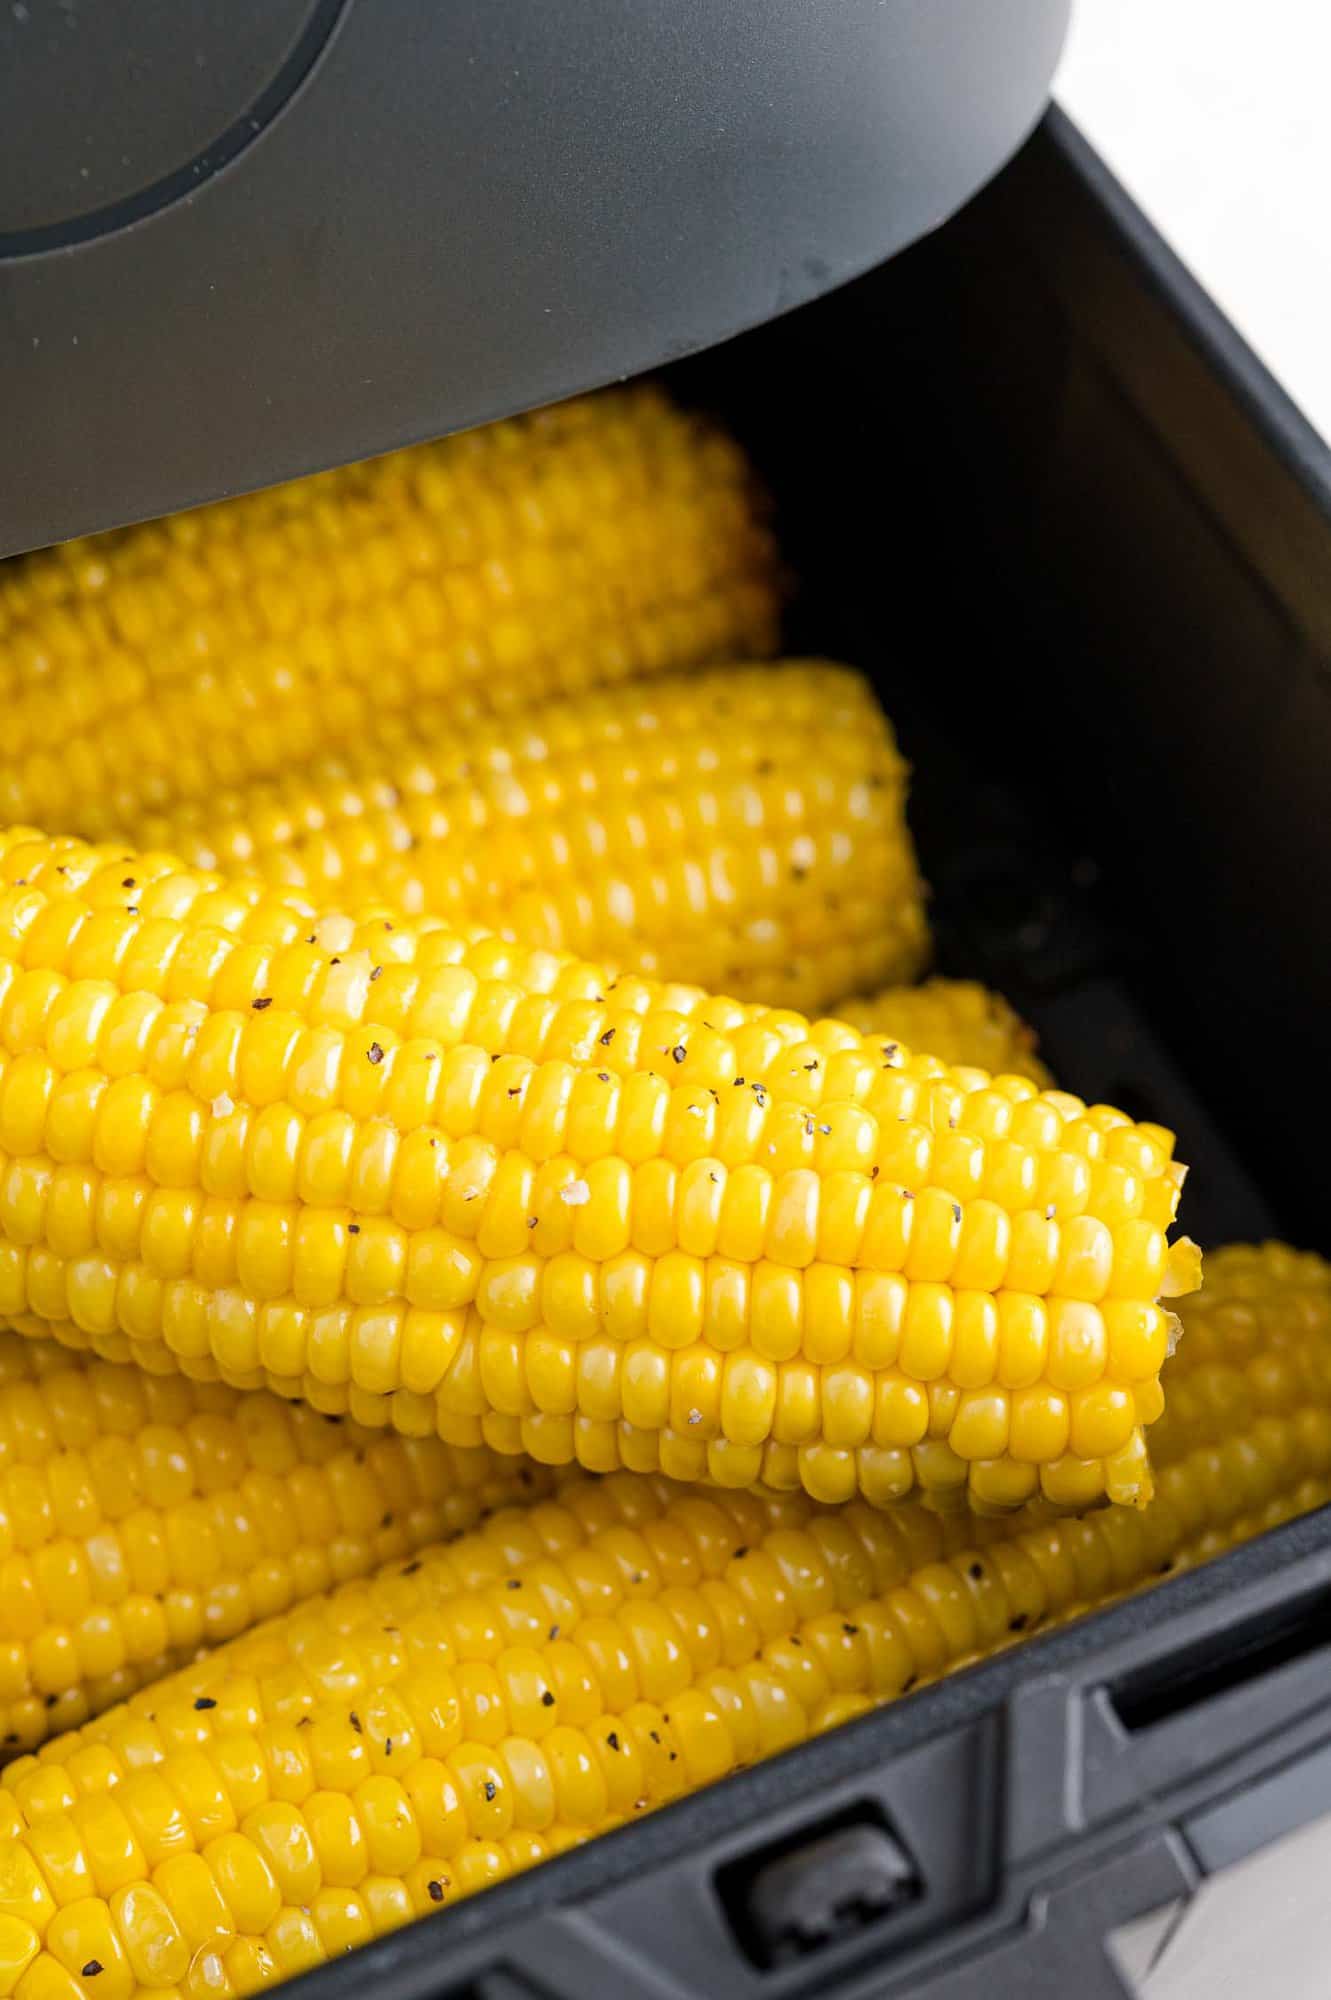 Air fryer corn on the cob inside the open air fryer basket.